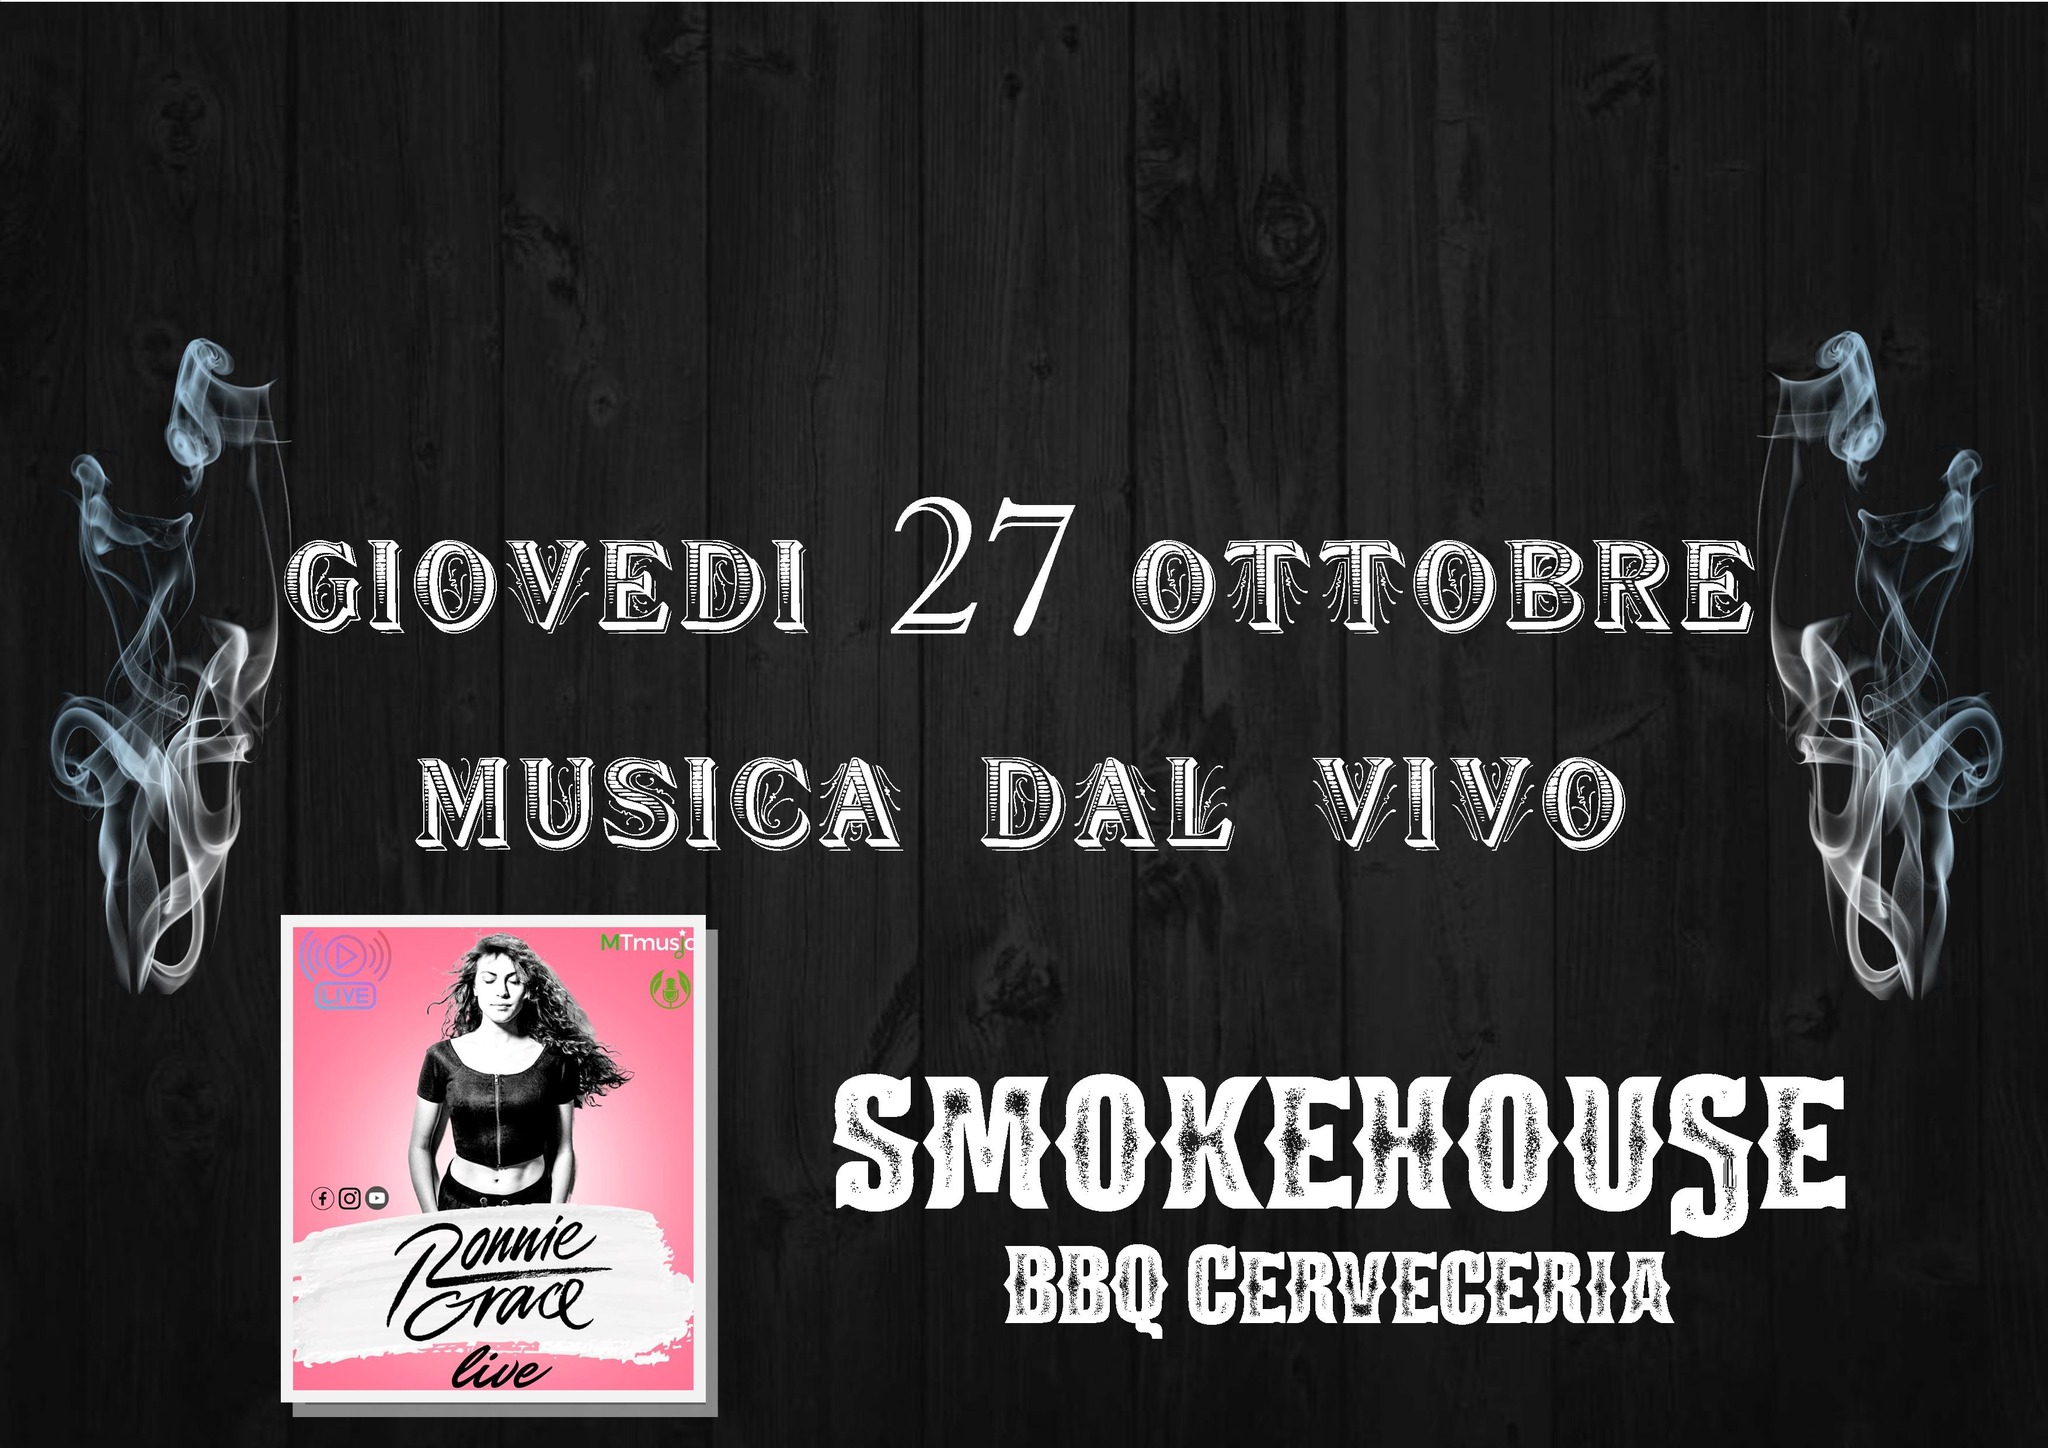 Musica dal Vivo in SmokeHouse BBQ Cerveceria - Ronnie Grace Live